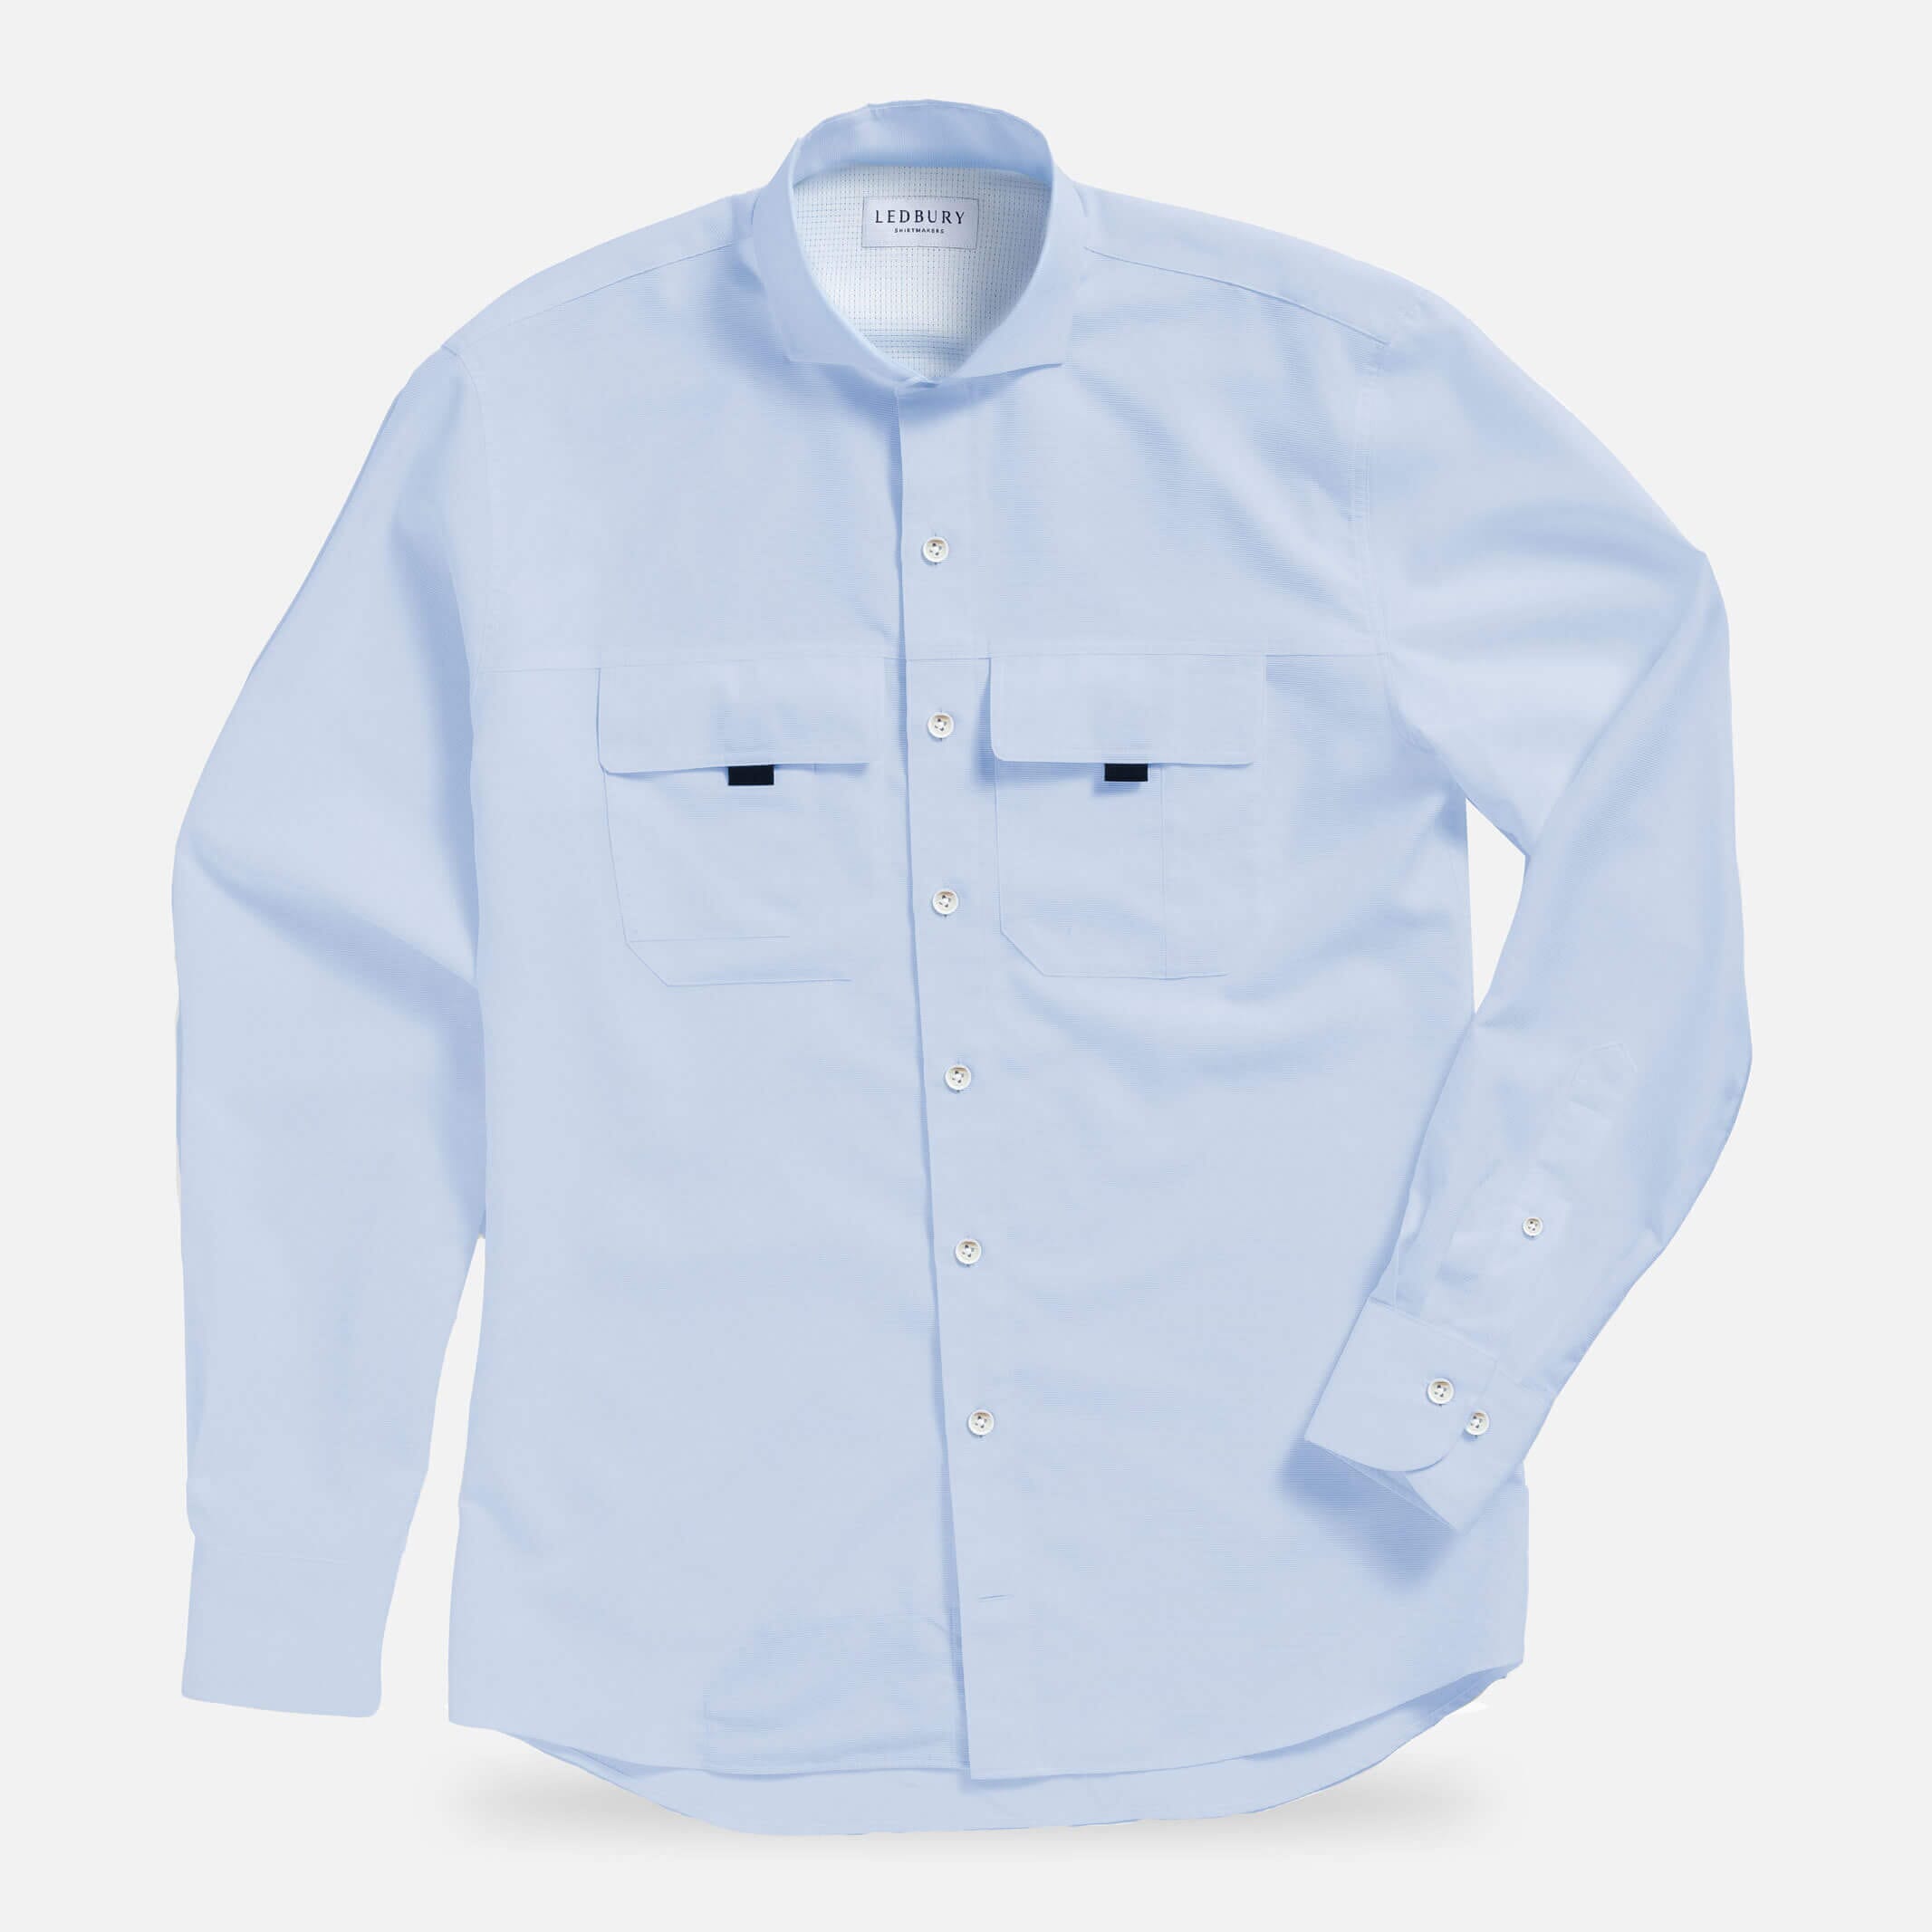 The Sky Blue Tulu Custom Fishing Shirt